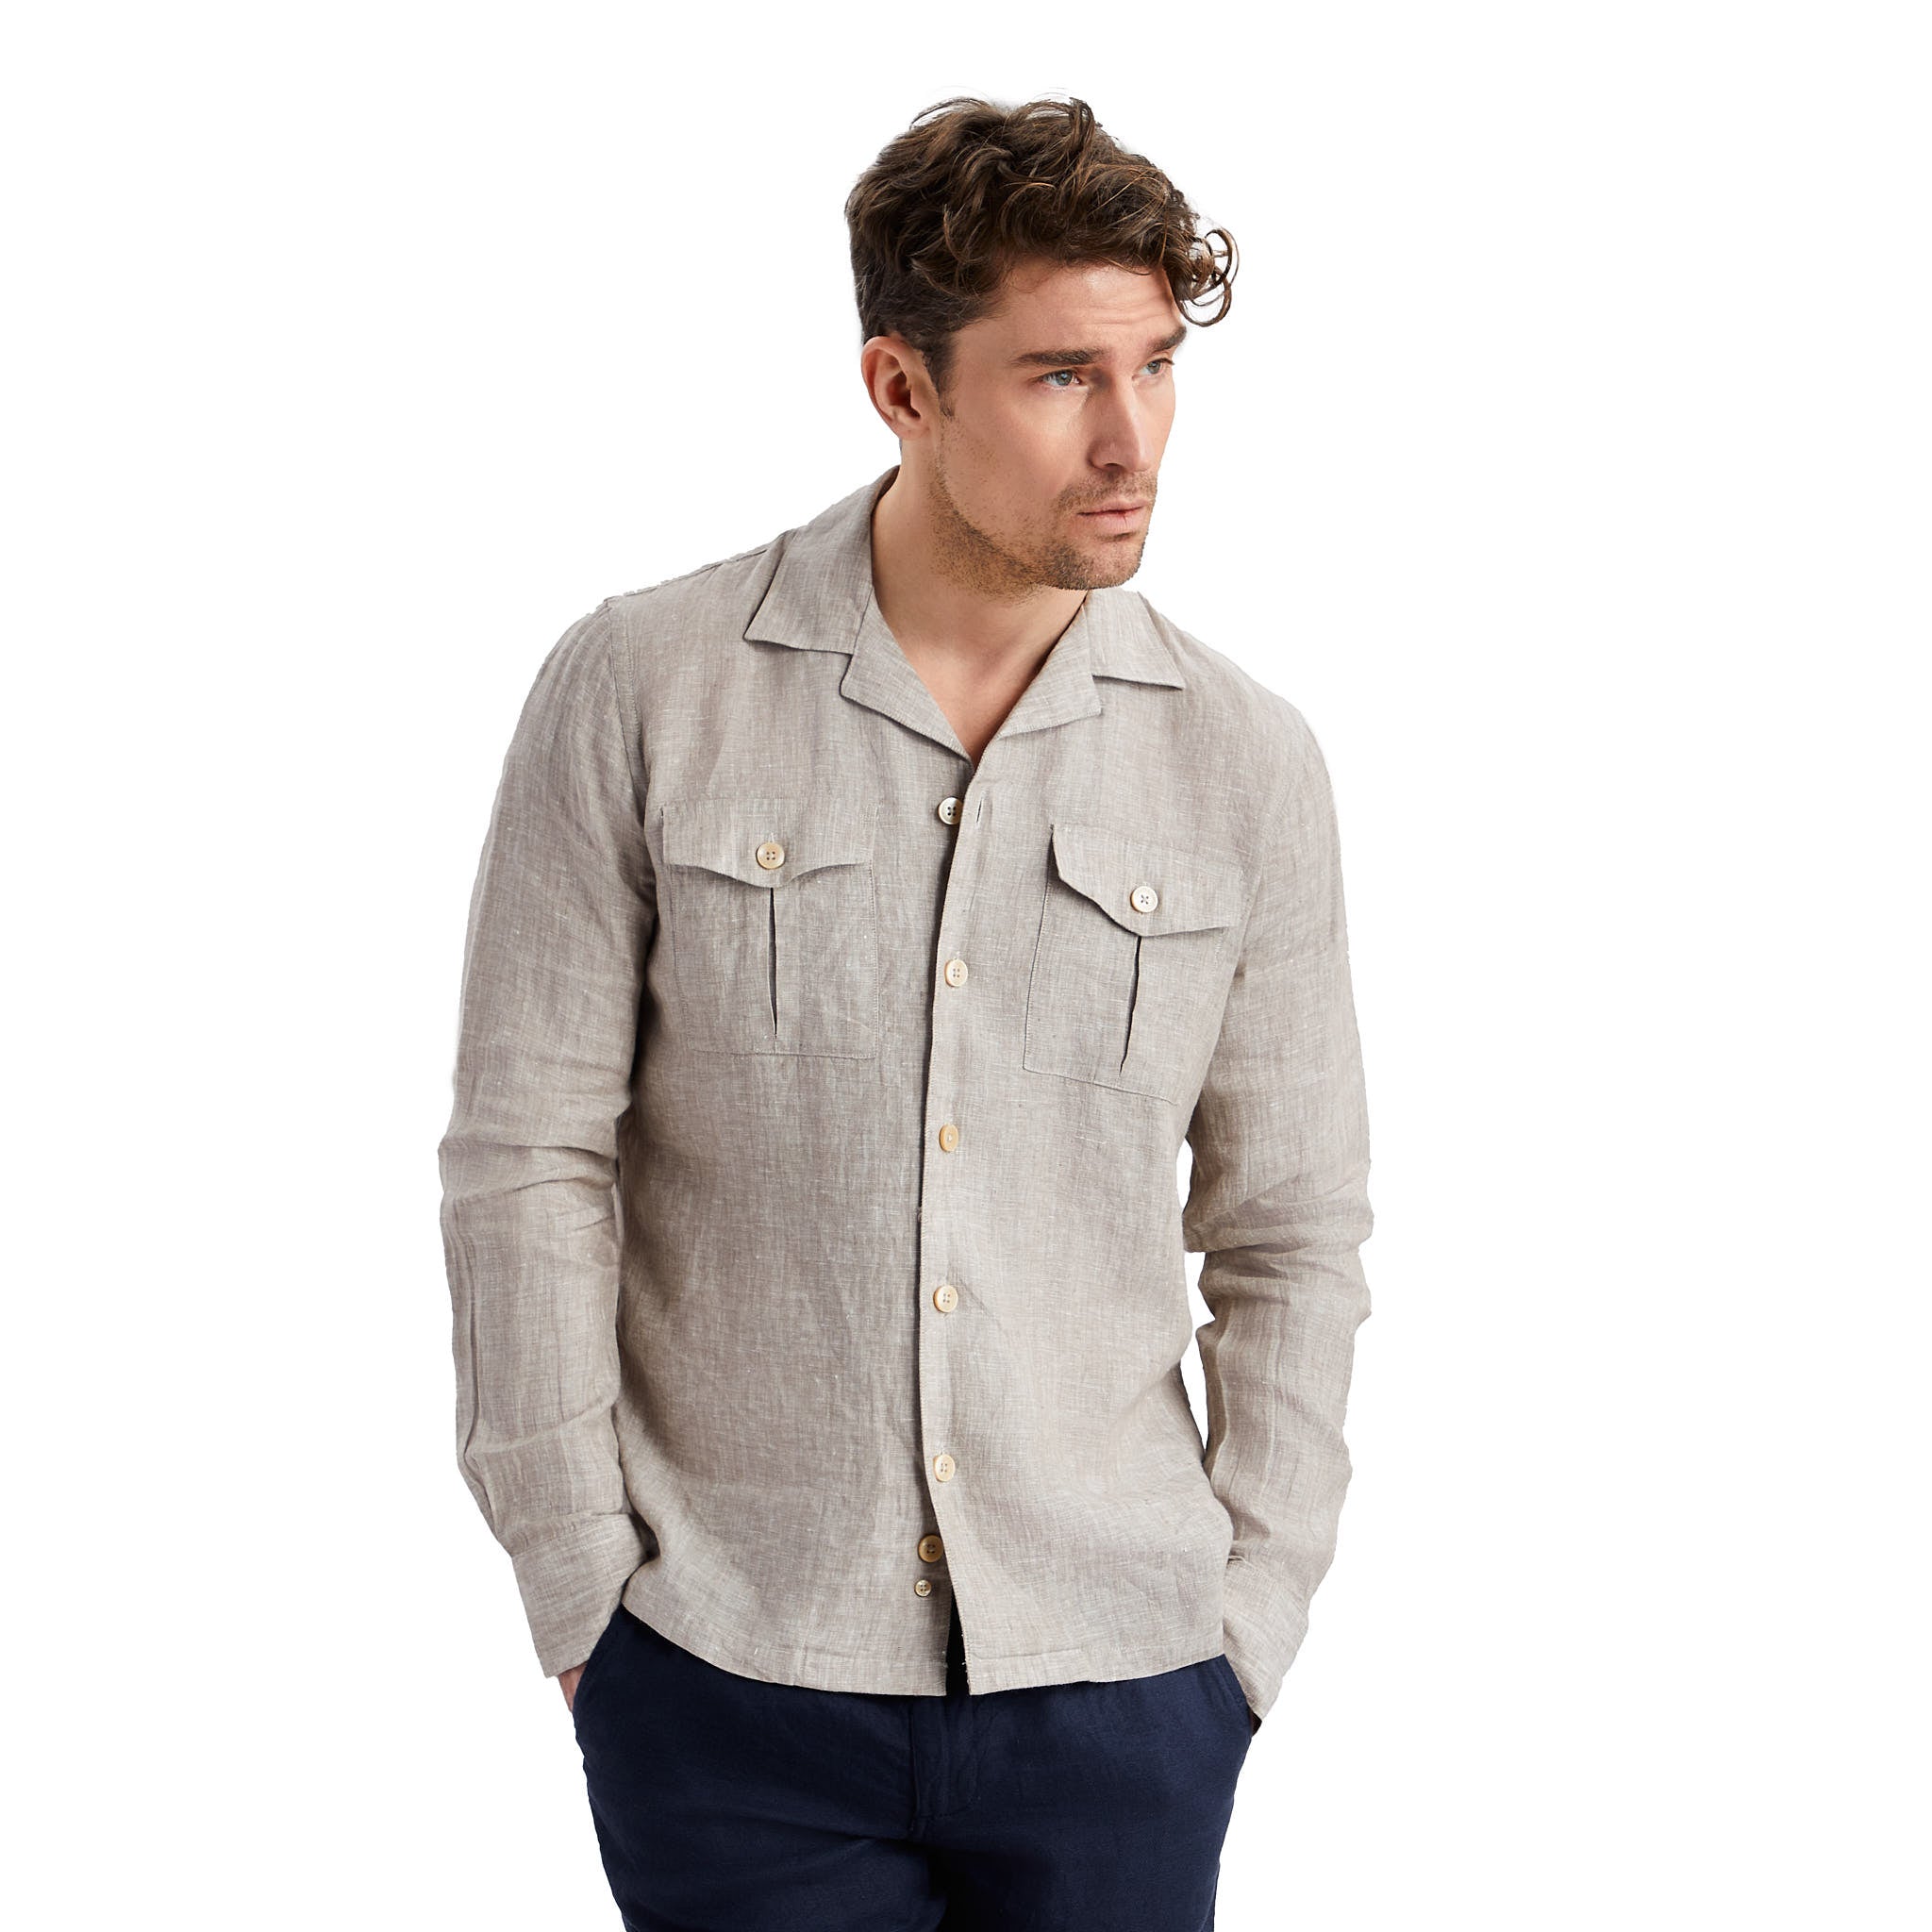 Sand Linen Shirt with Pocket